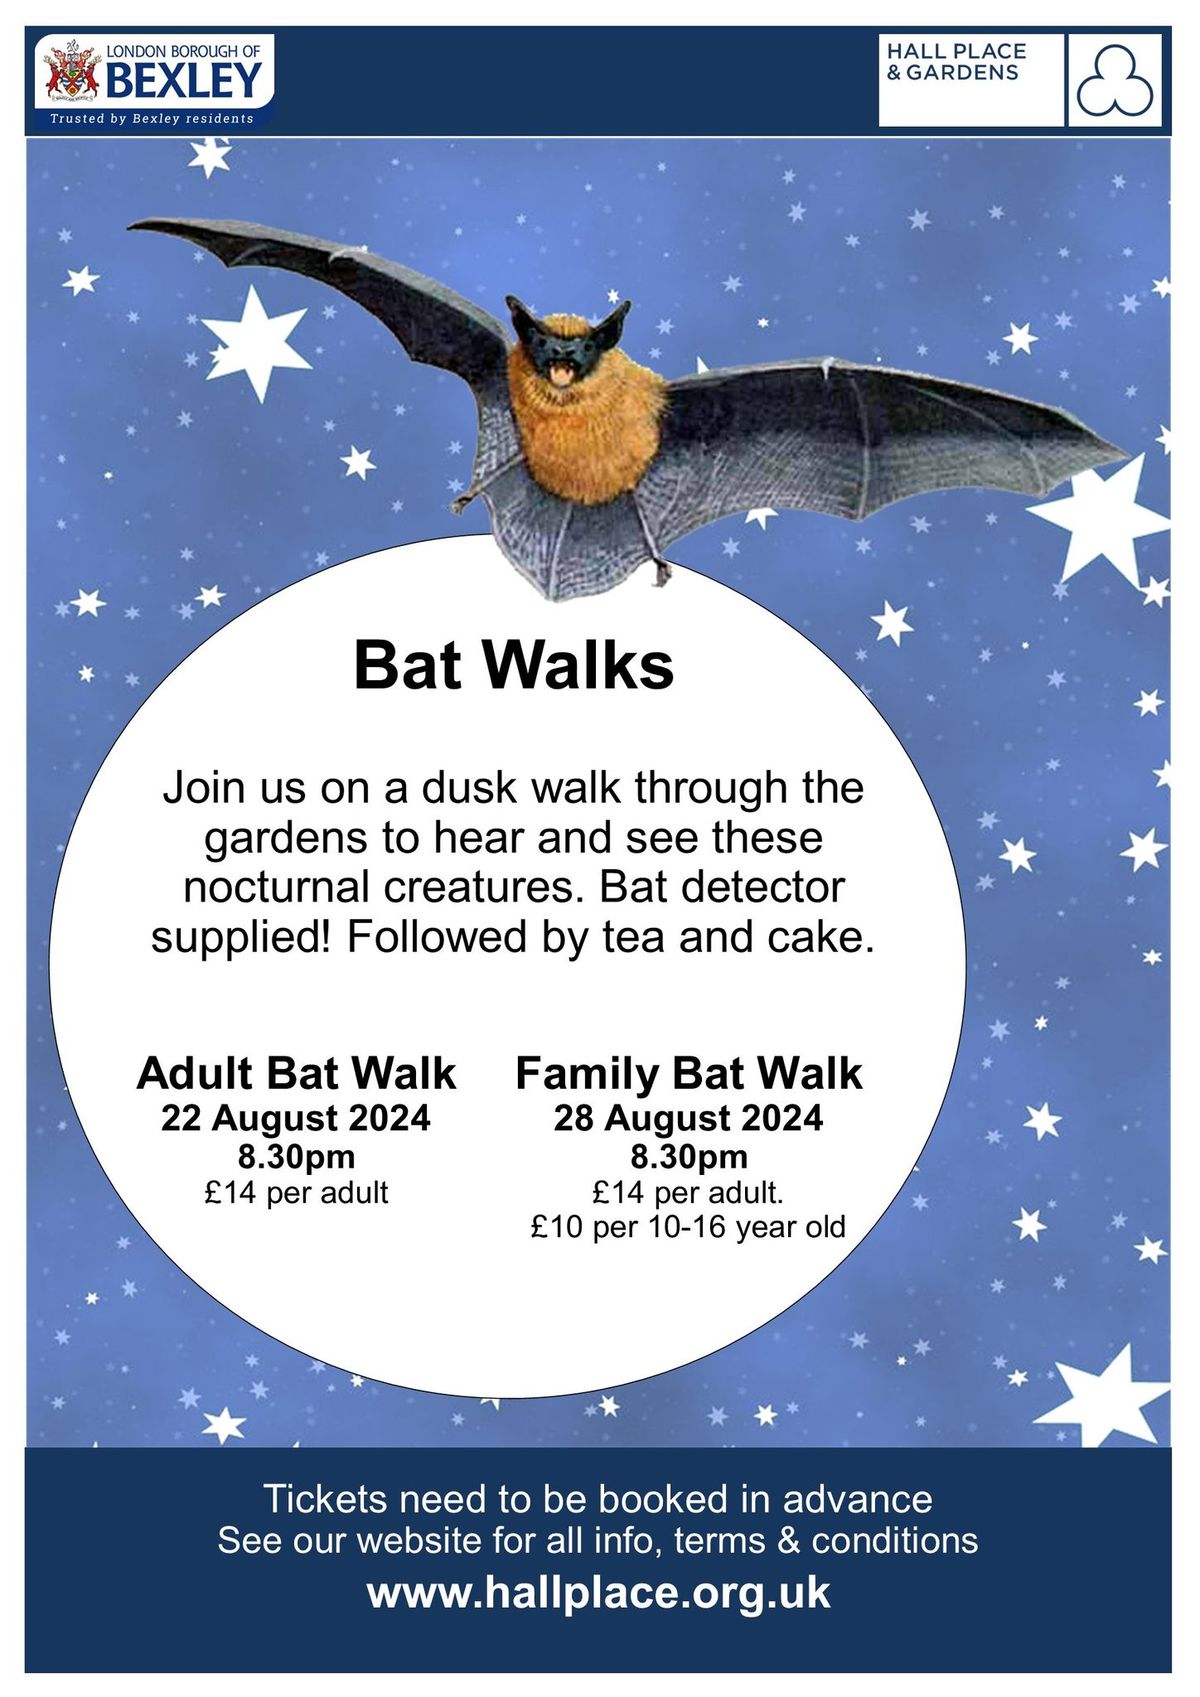 Family Bat Walk